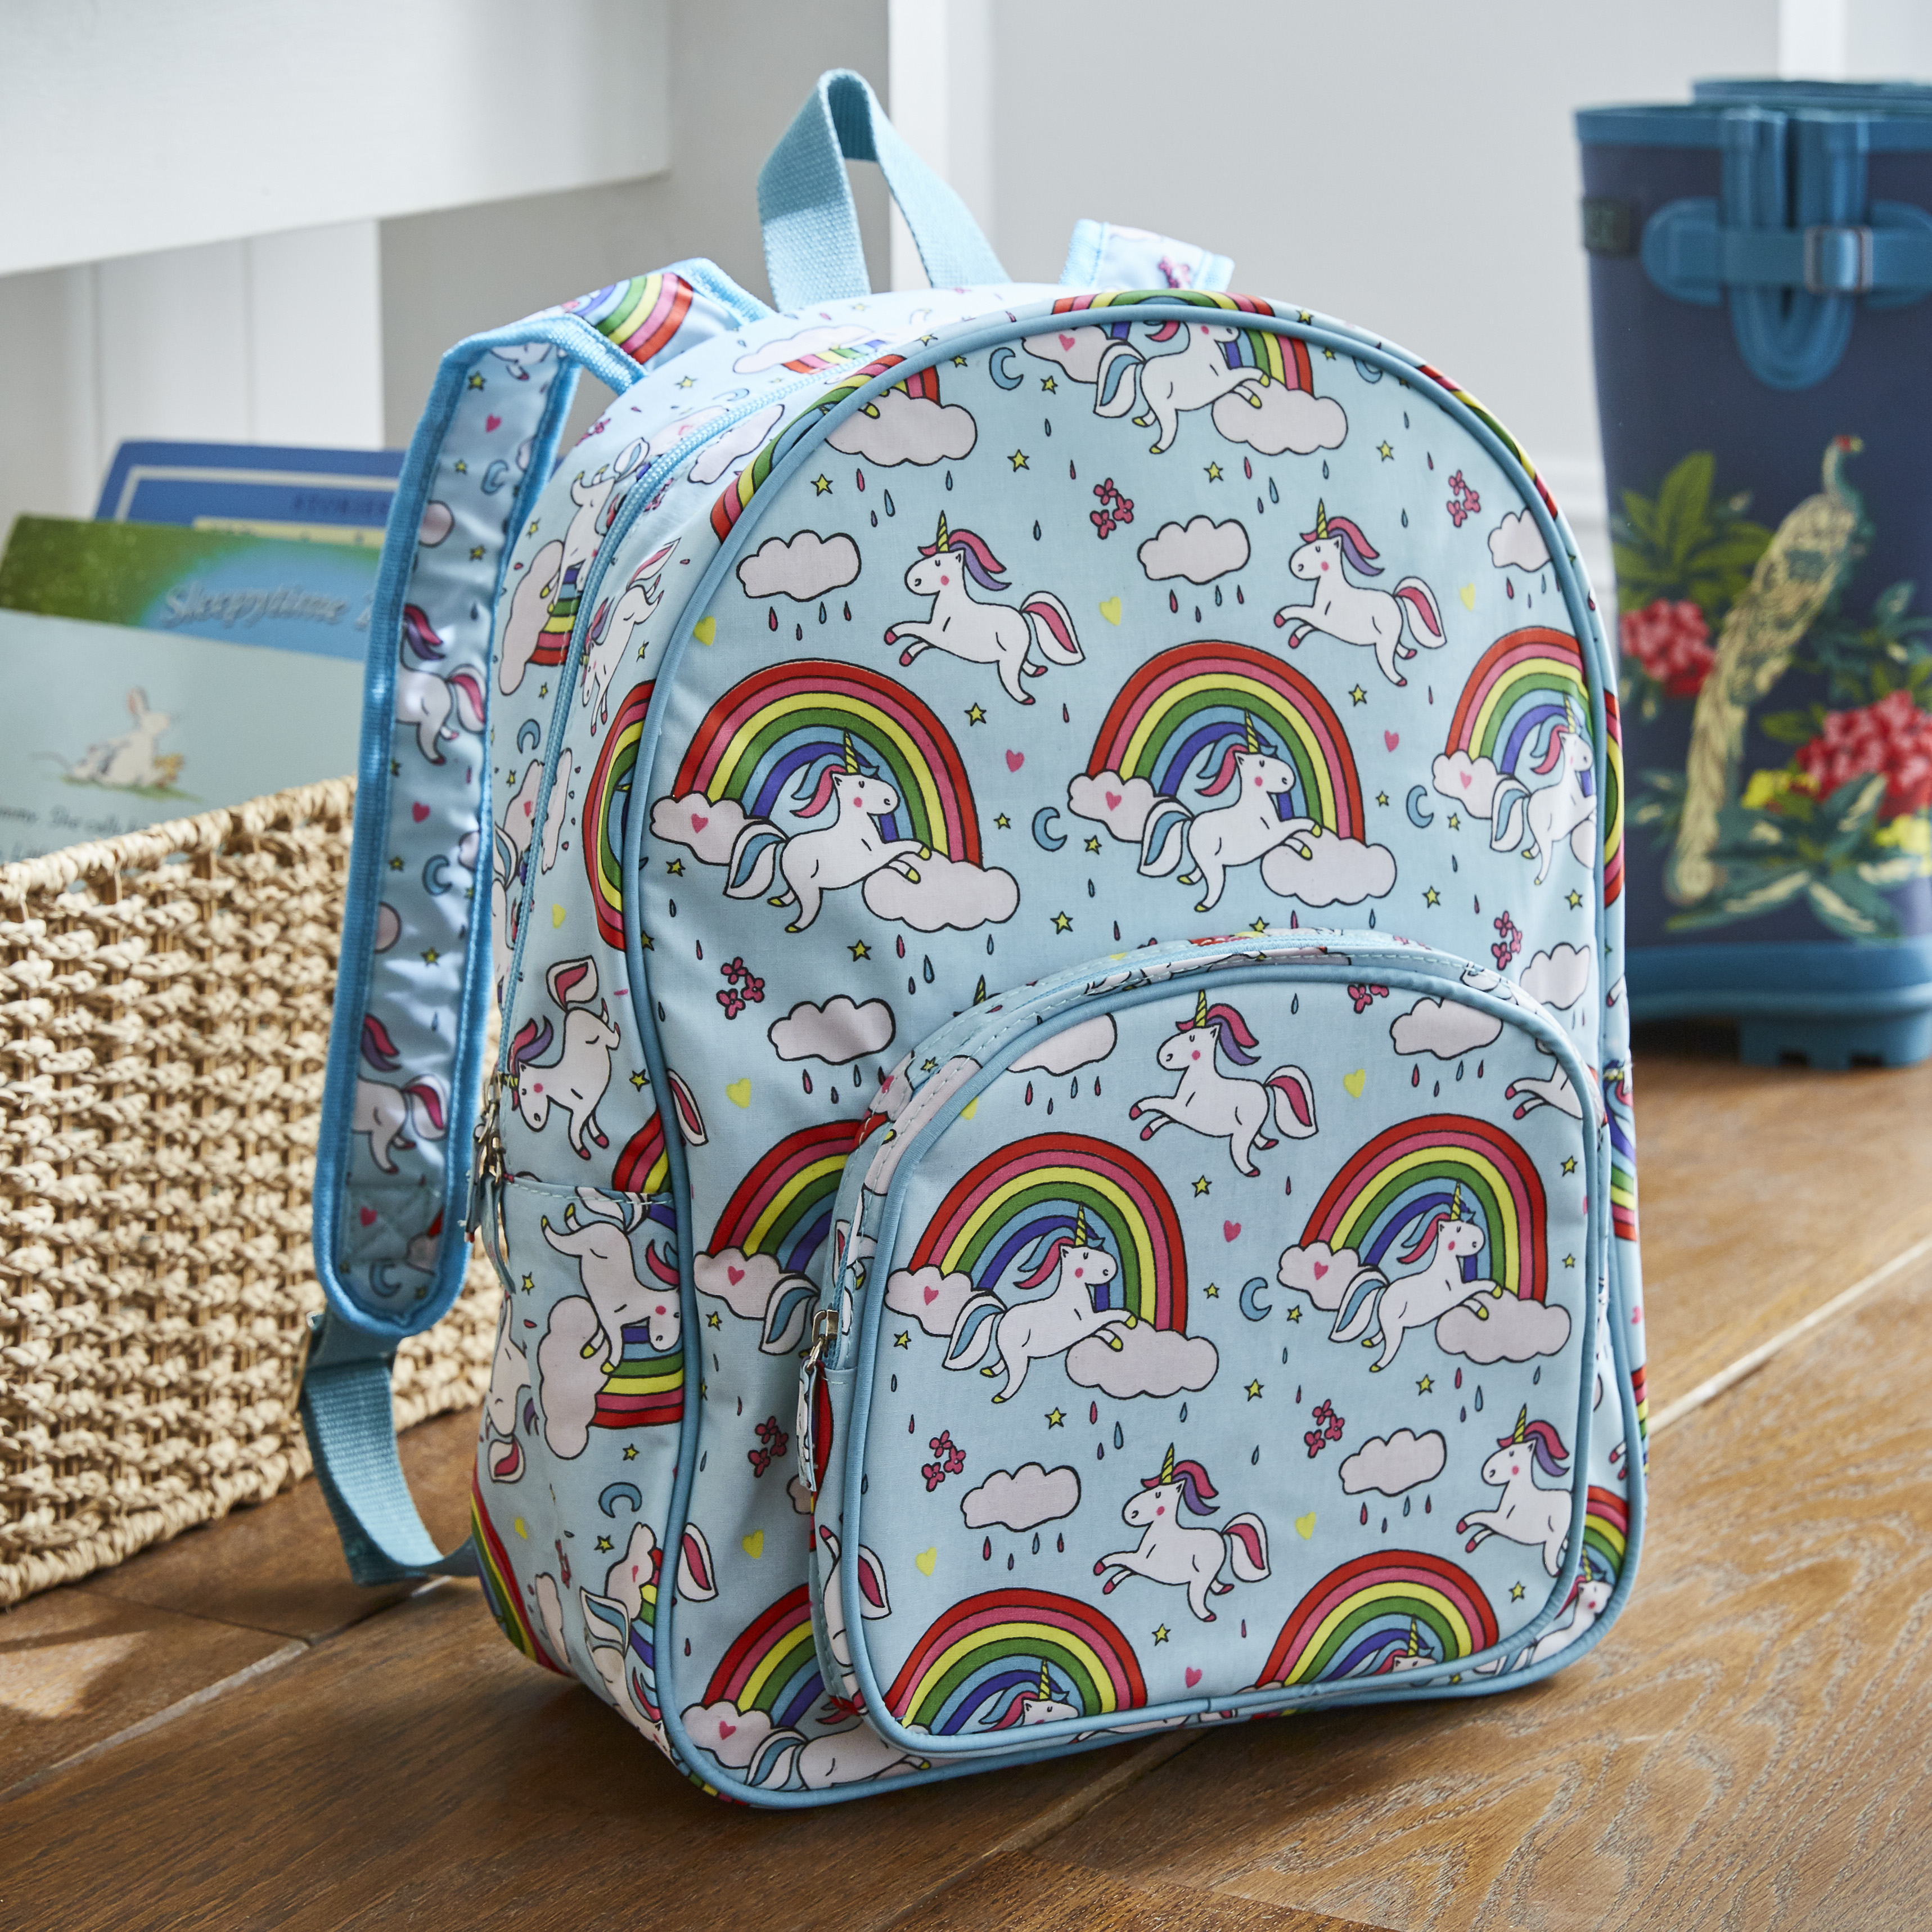 Ulster Weavers Unicorn Children's Backpack